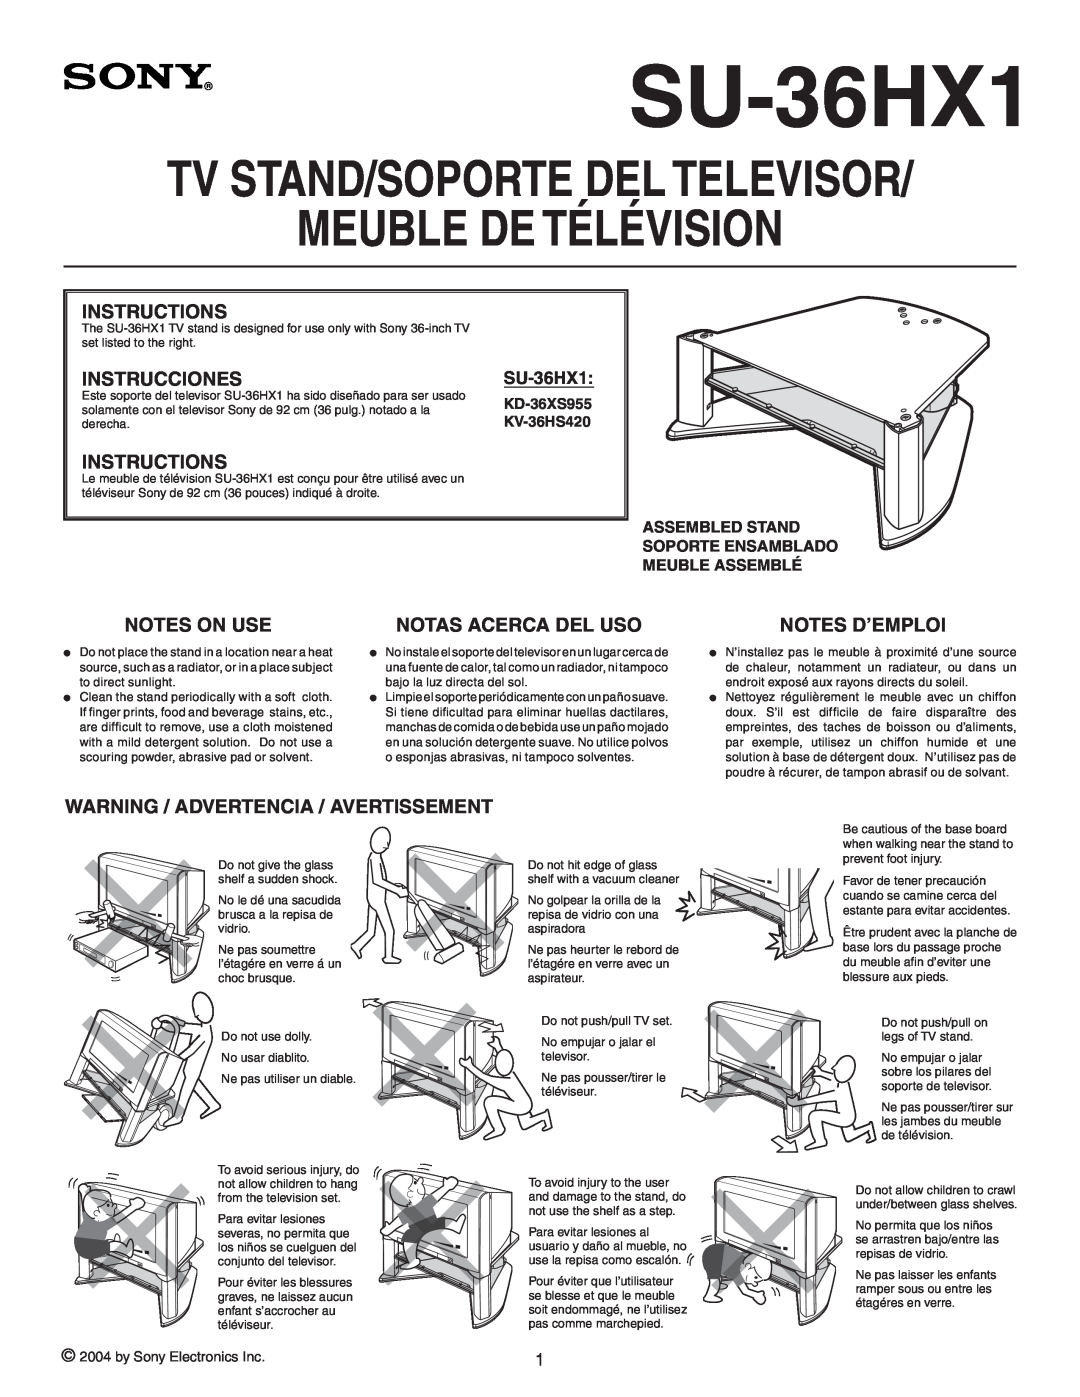 Sony SU-36HX1 manual Meuble De Télévision, Tv Stand/Soporte Del Televisor, Instructions, Instrucciones, Notes On Use 